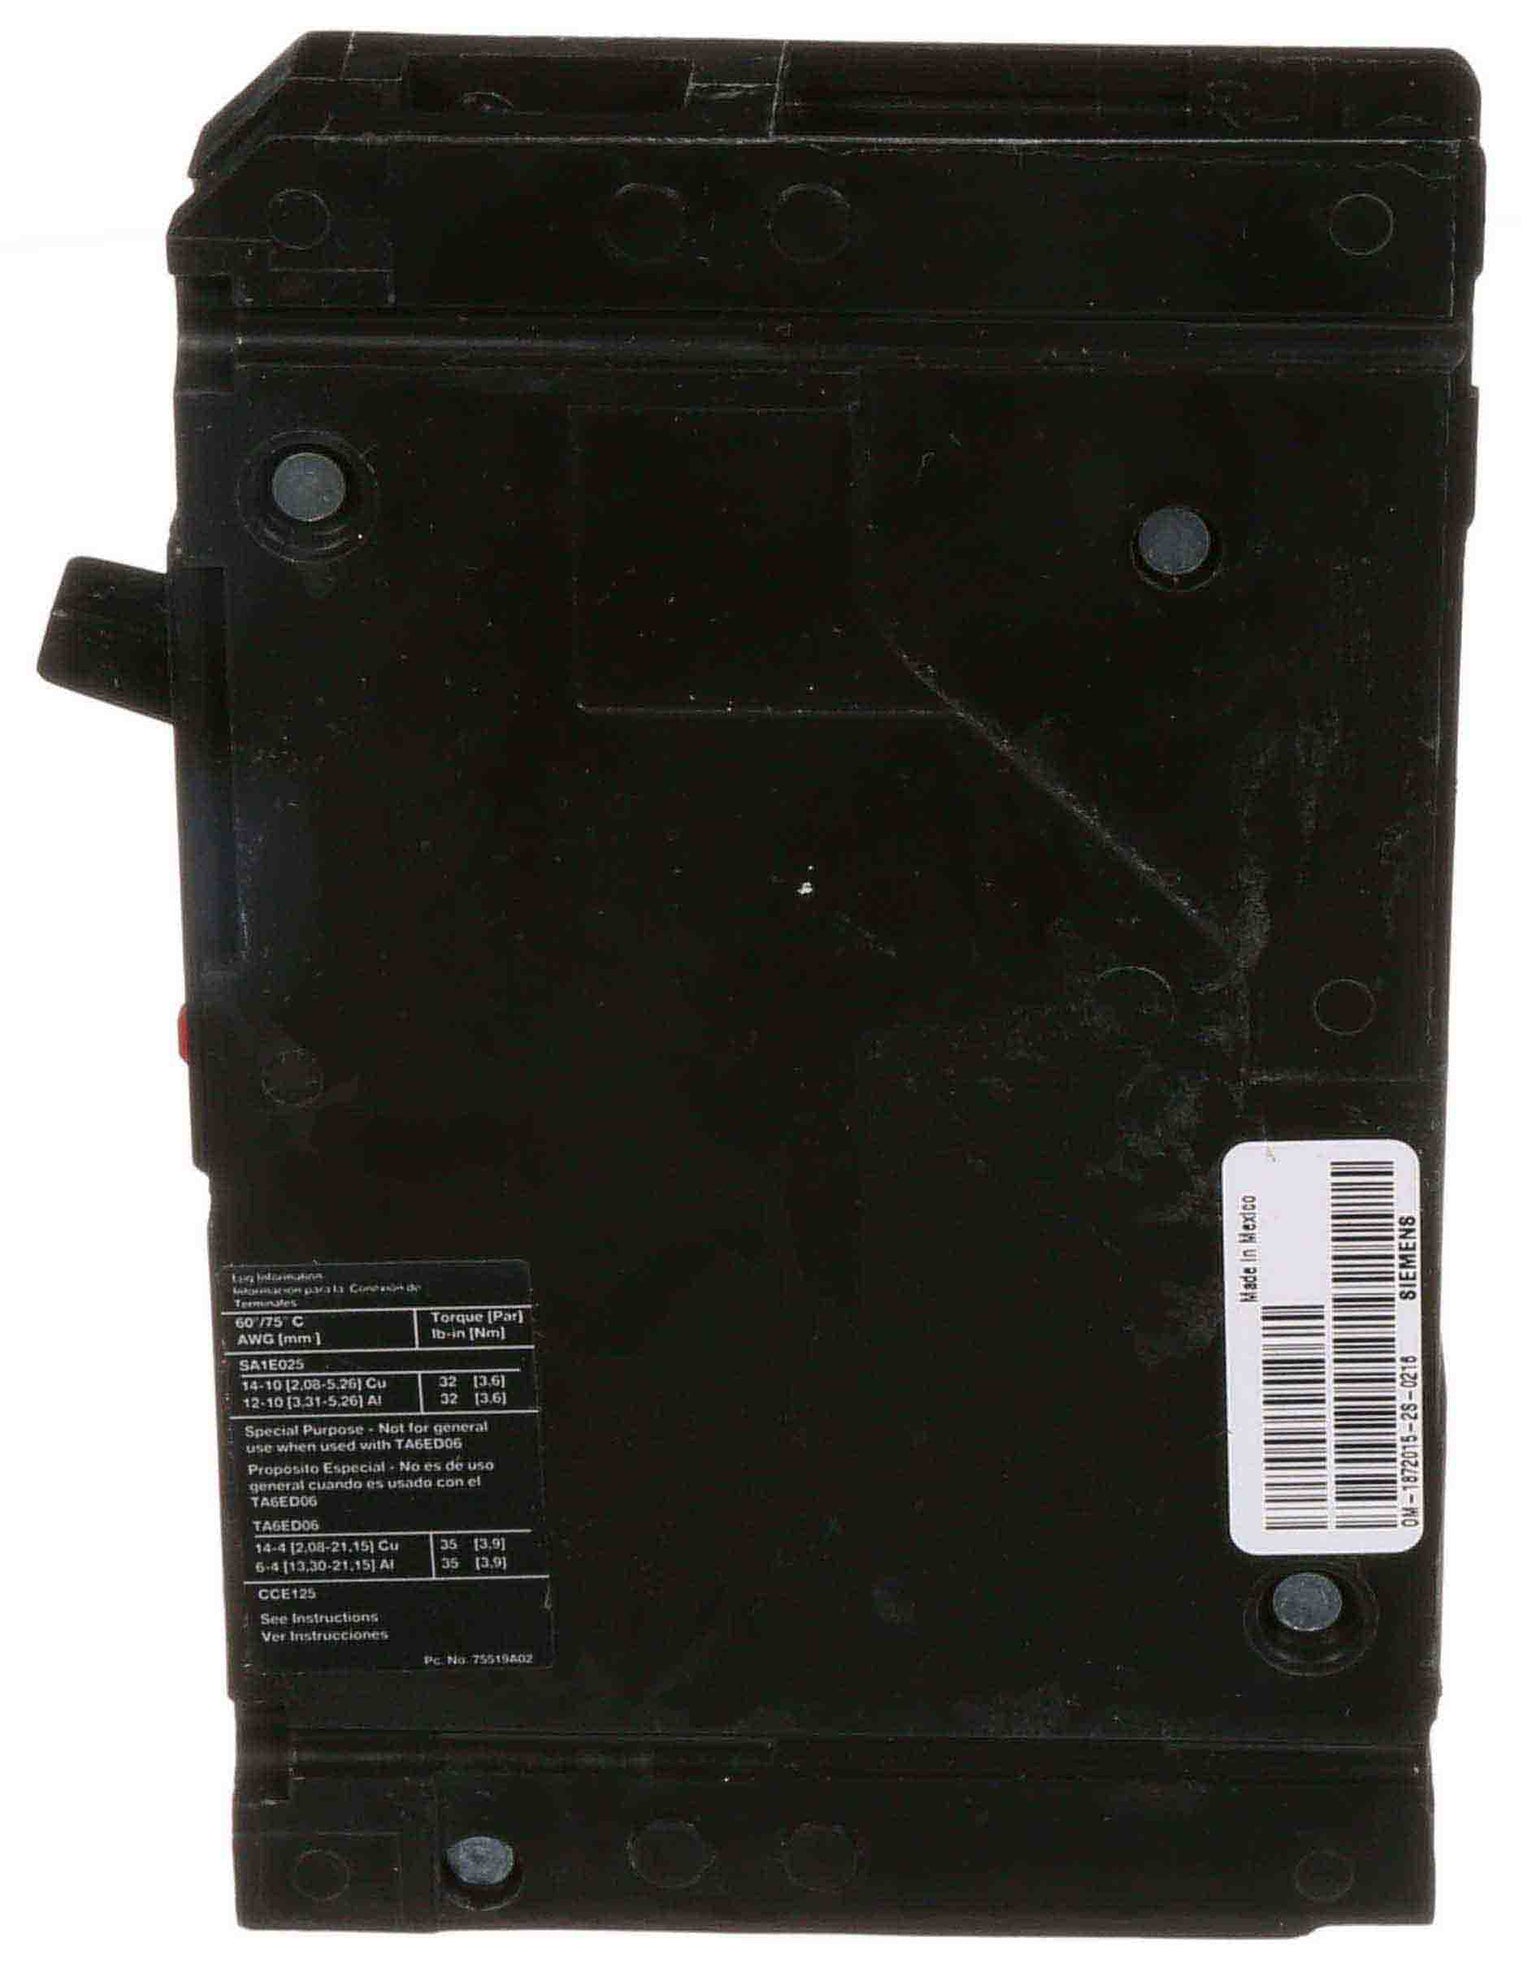 ED21B035 - Siemens - Molded Case Circuit Breaker